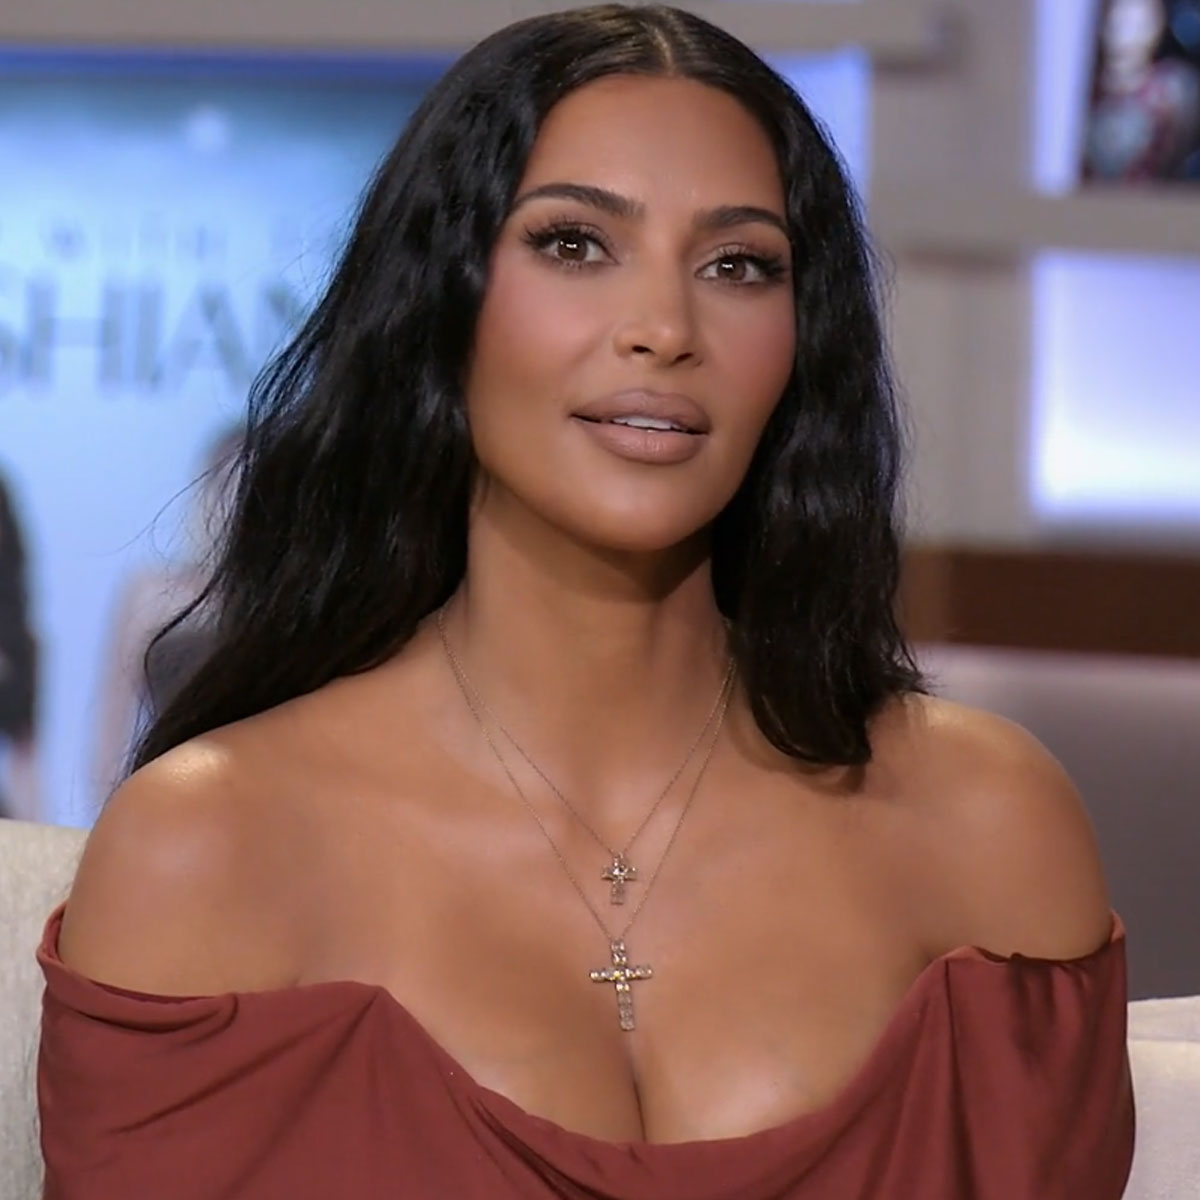 Celebrity Sex Tapes Kim Kardashian - Kim Kardashian Admits Infamous Sex Tape Helped Success of KUWTK - E! Online